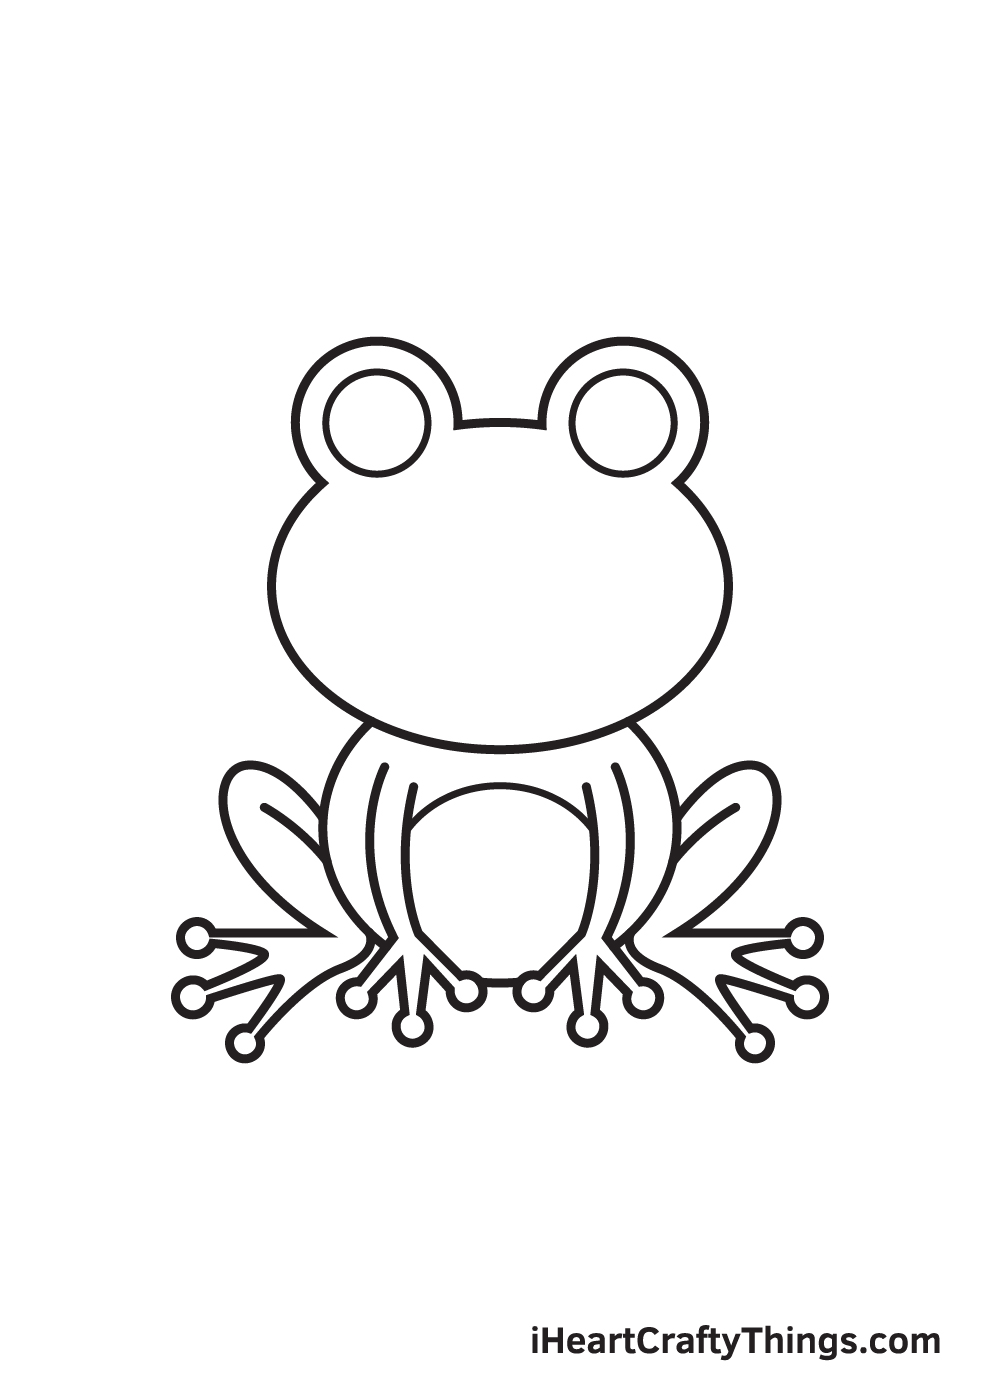 Amphibian drawing free image download